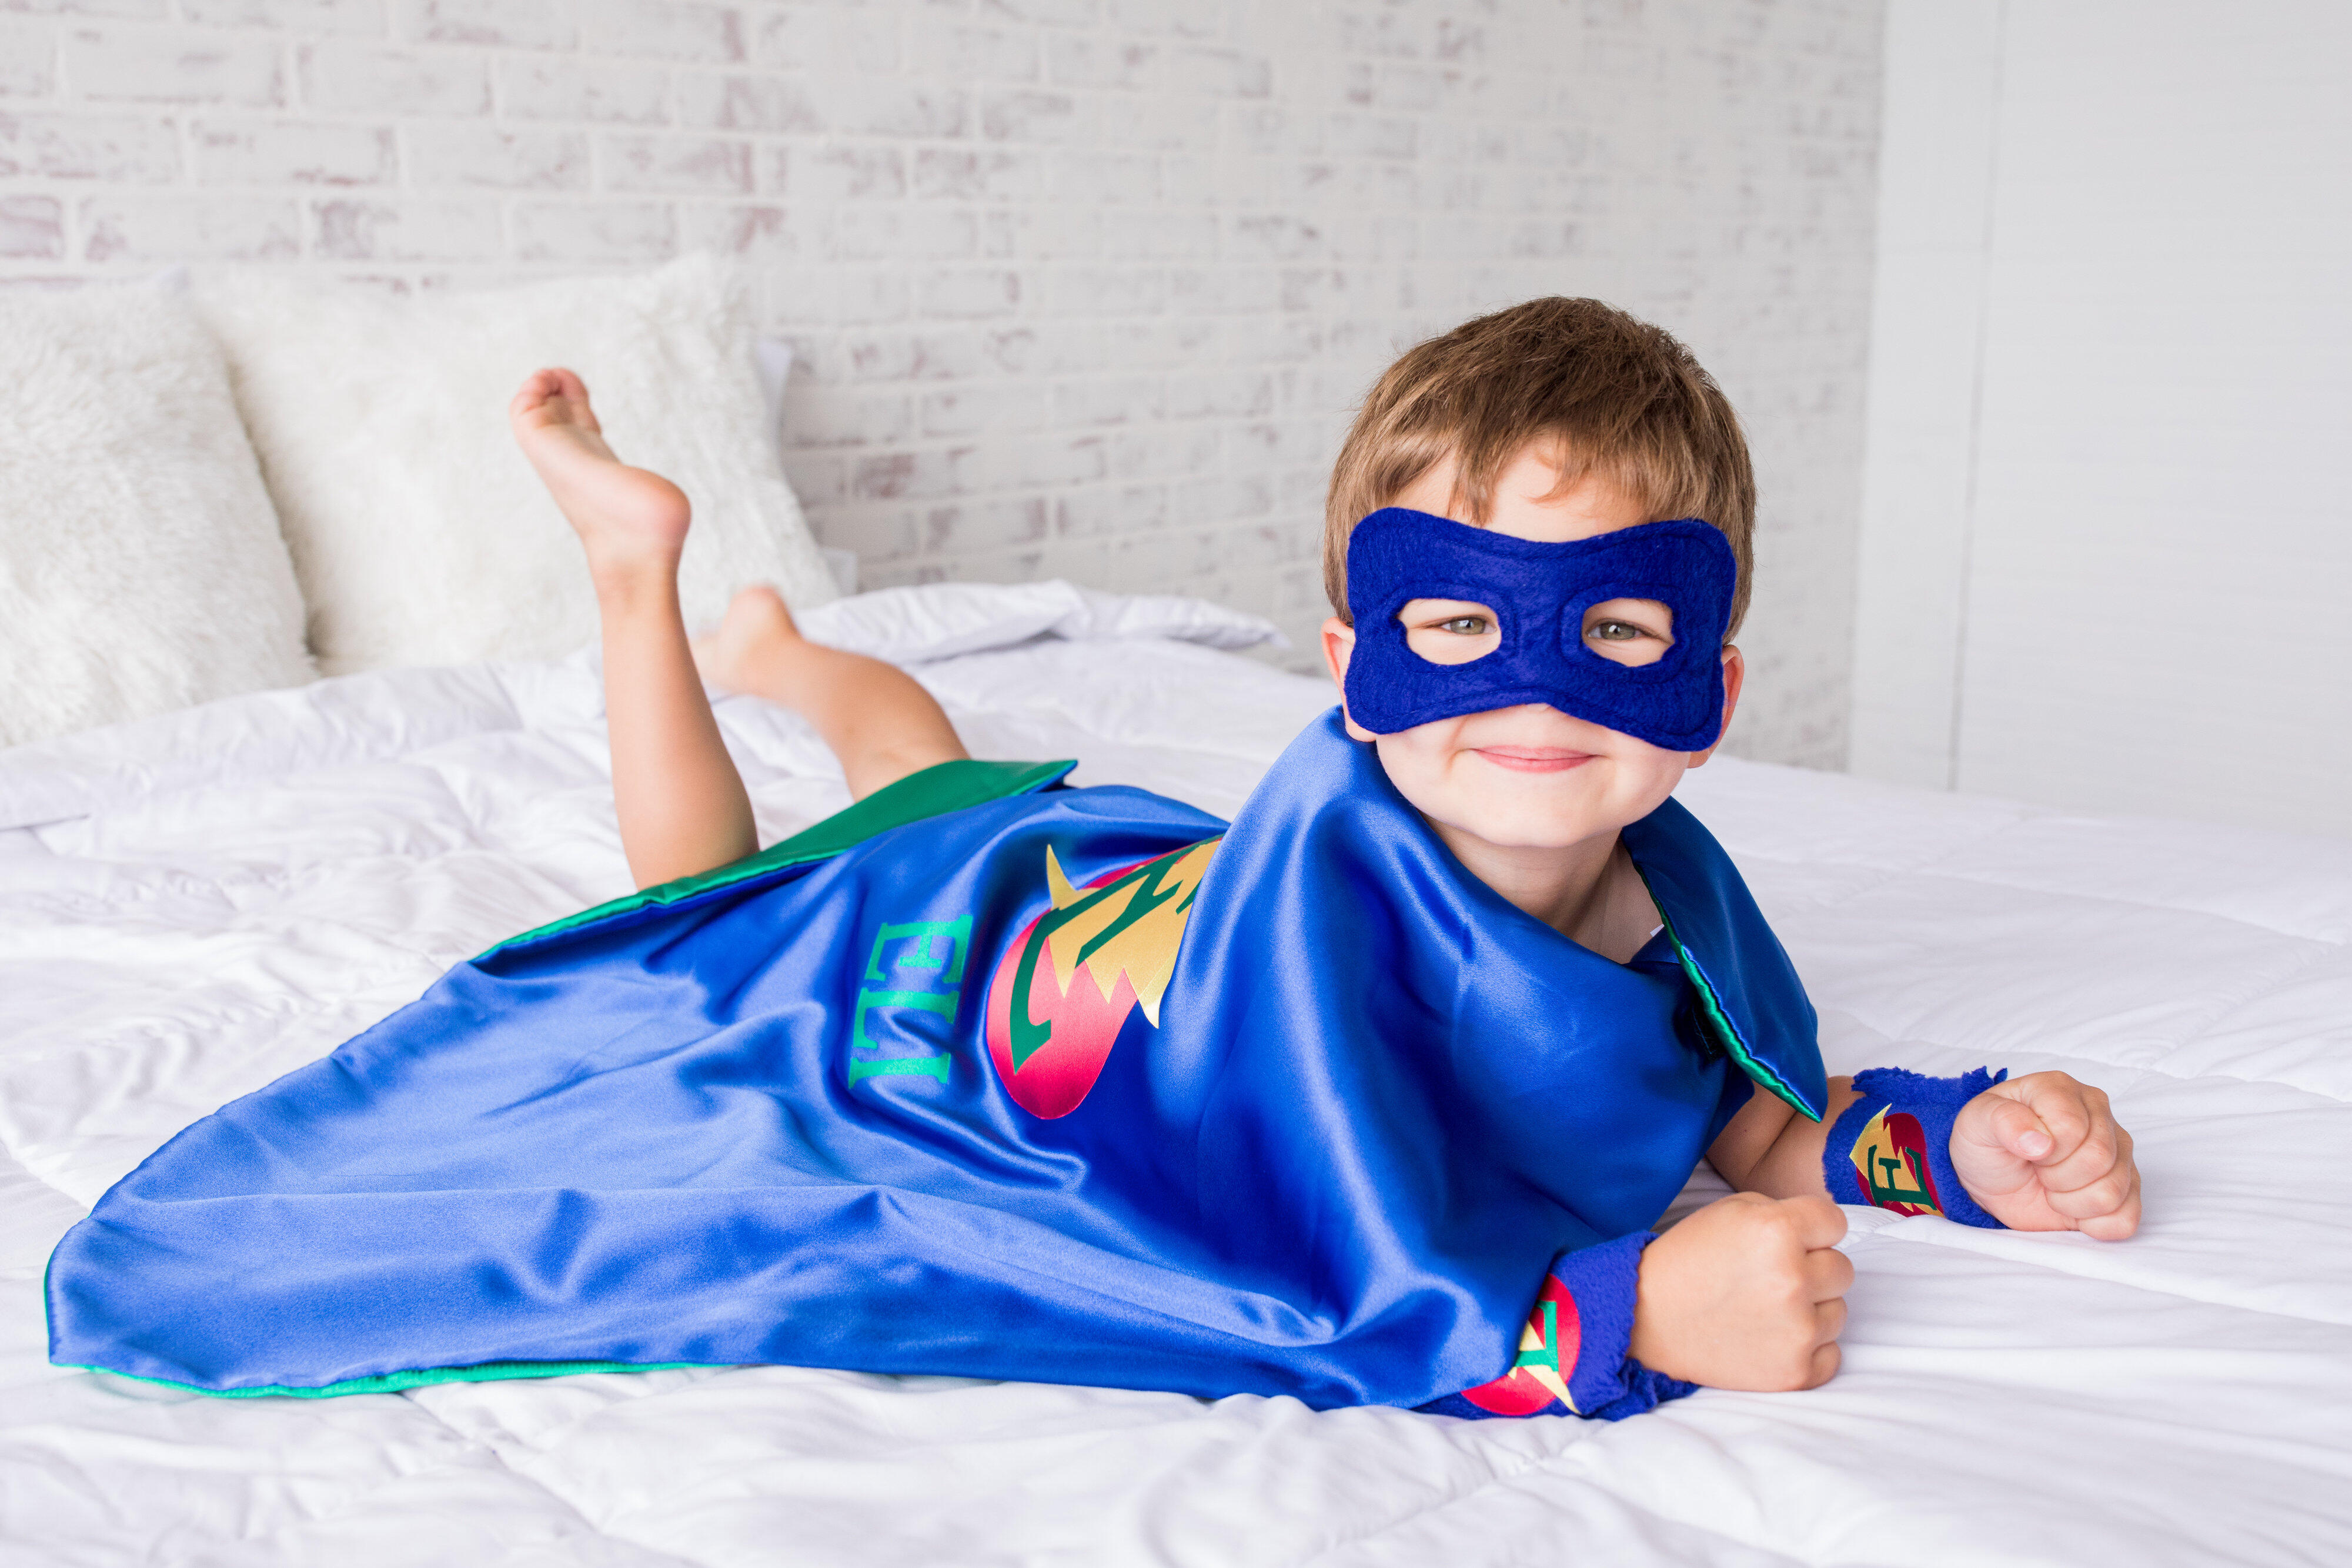 Fun & :: & Accessories :: SUPERHERO - Kid Cape - Personalized Super Hero Cape - Costume - Superhero Cape Set - Superhero party - Armband - Cuffs - Mask